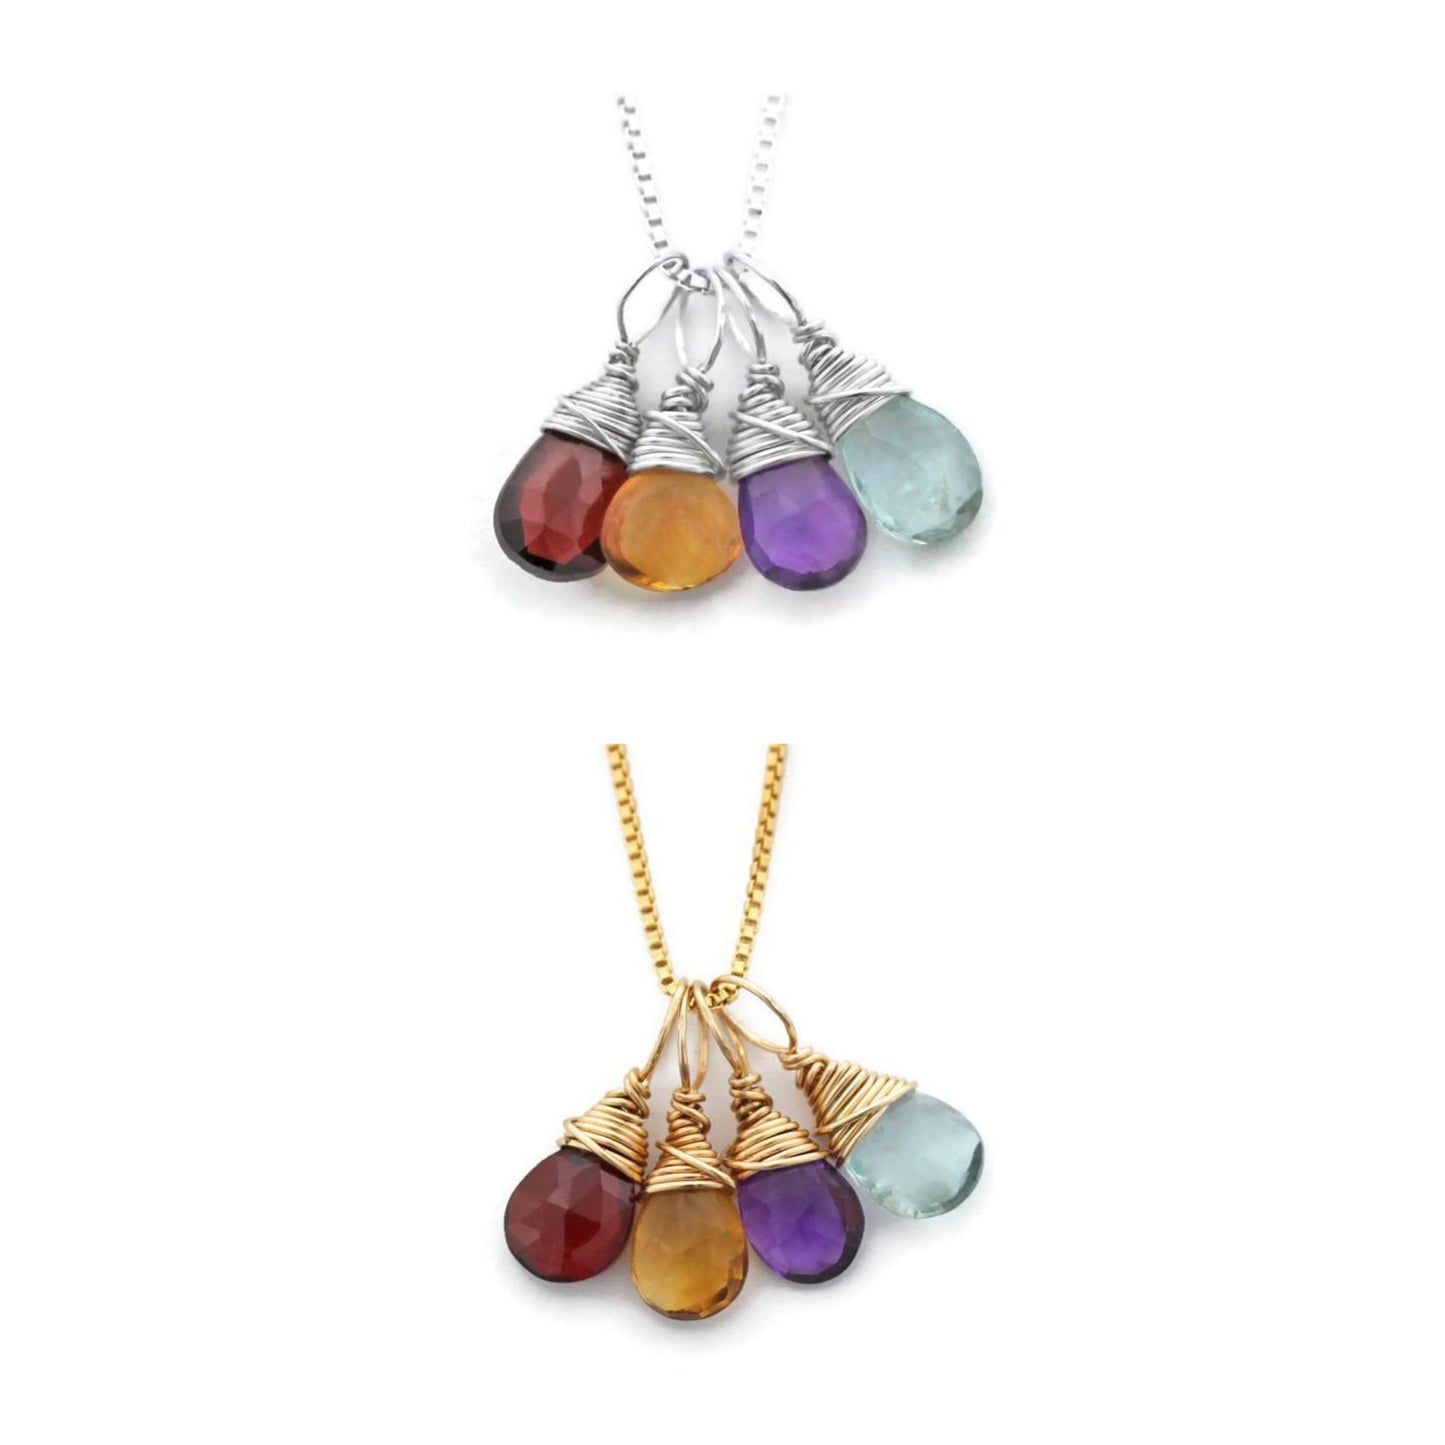 4 birthstone mom necklace by Jen Lesea Designs